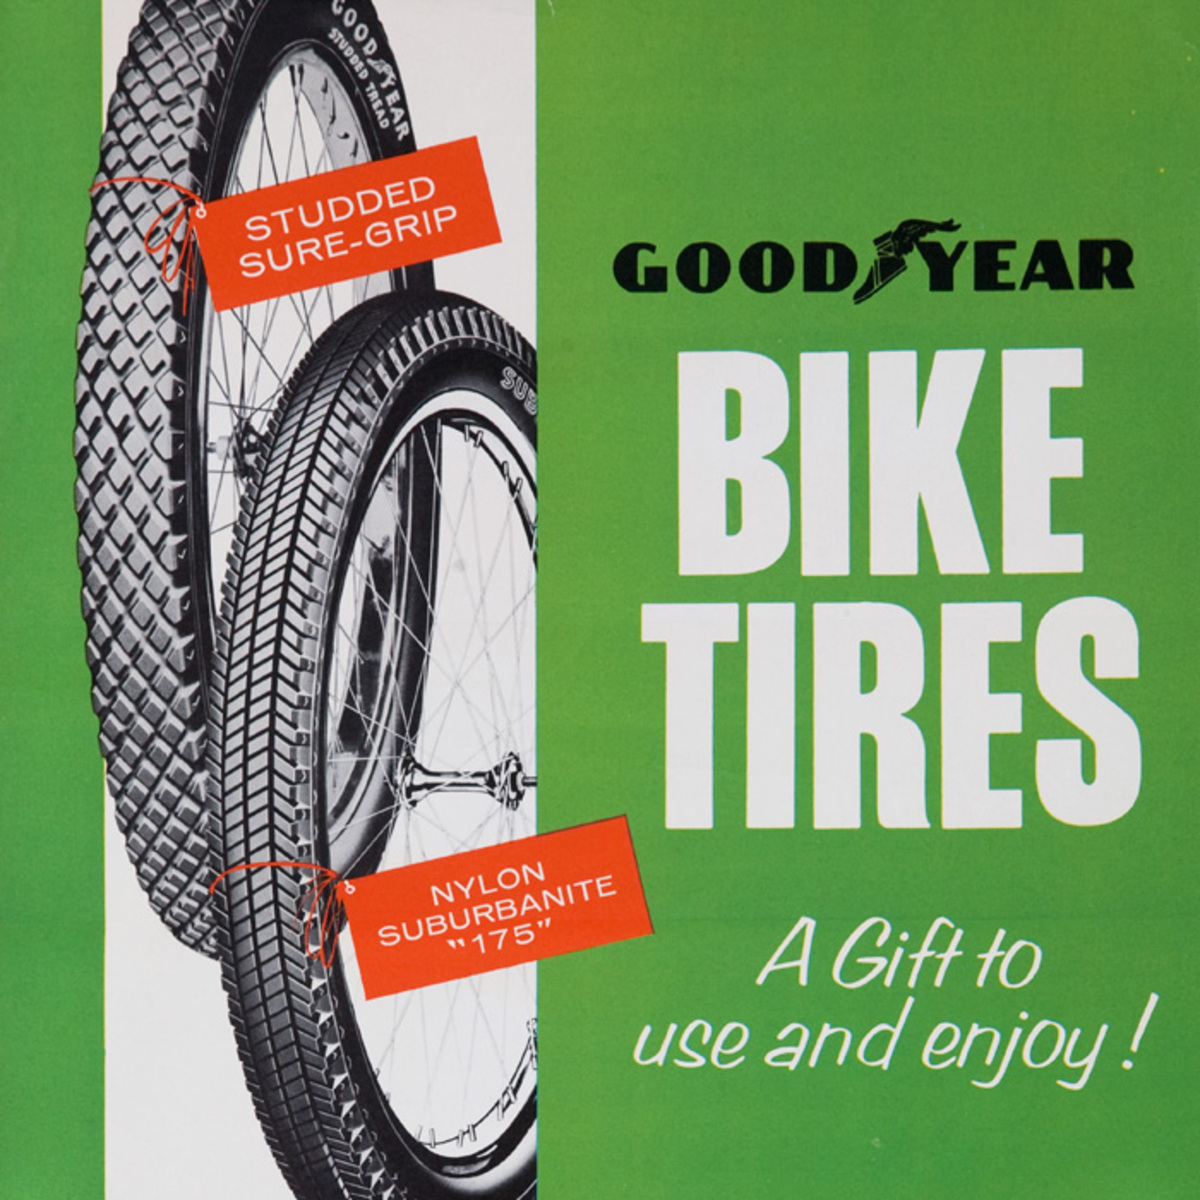 GoodYear Biek Tires Original American 1950s Bicycle Shop Poster